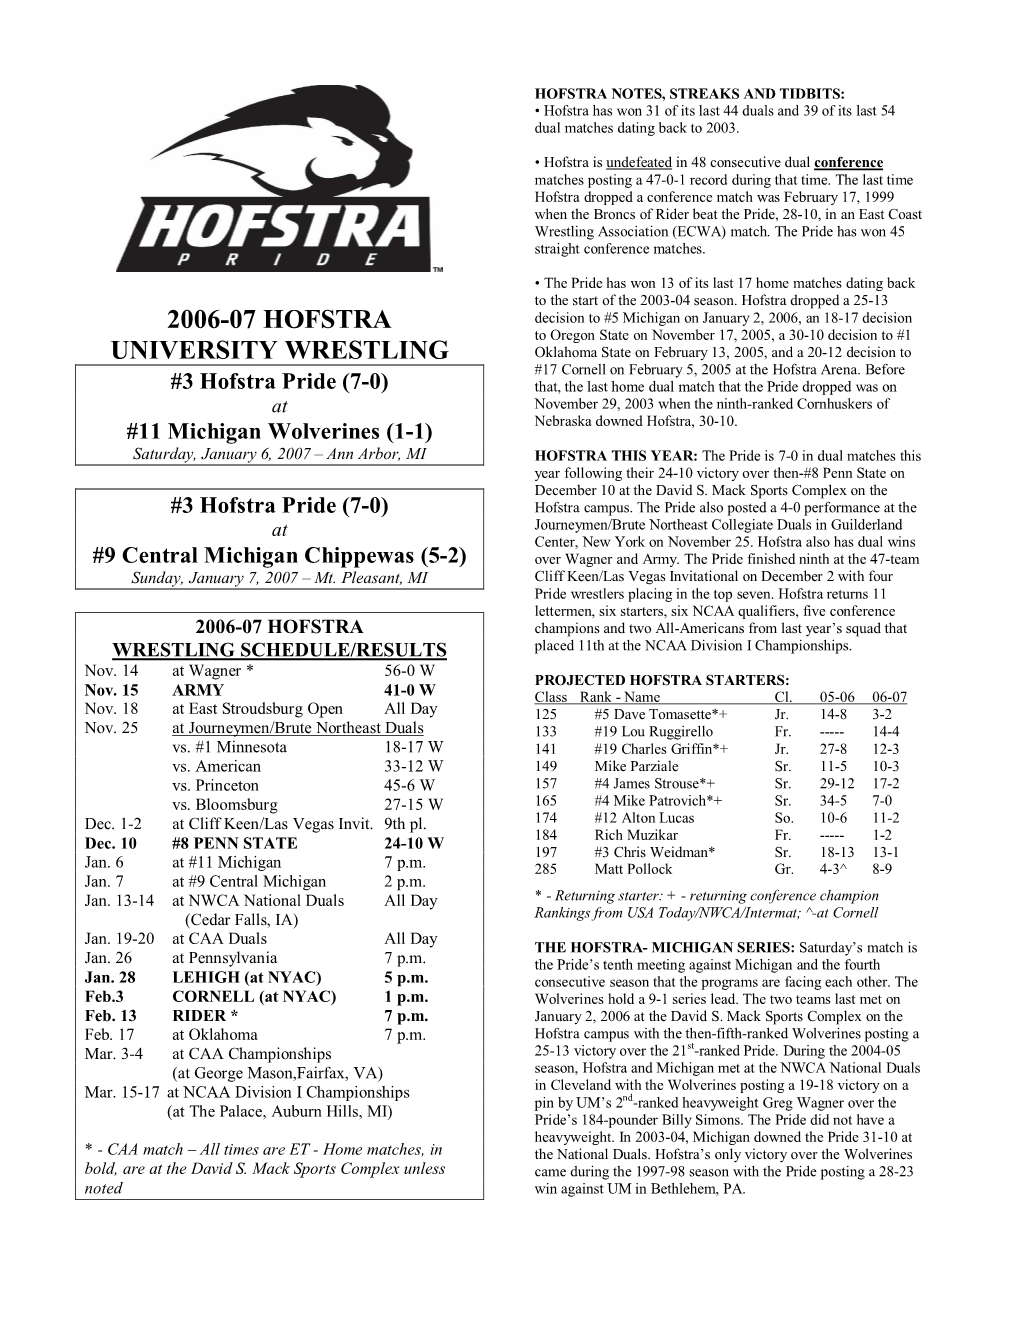 2006-07 Hofstra University Wrestling